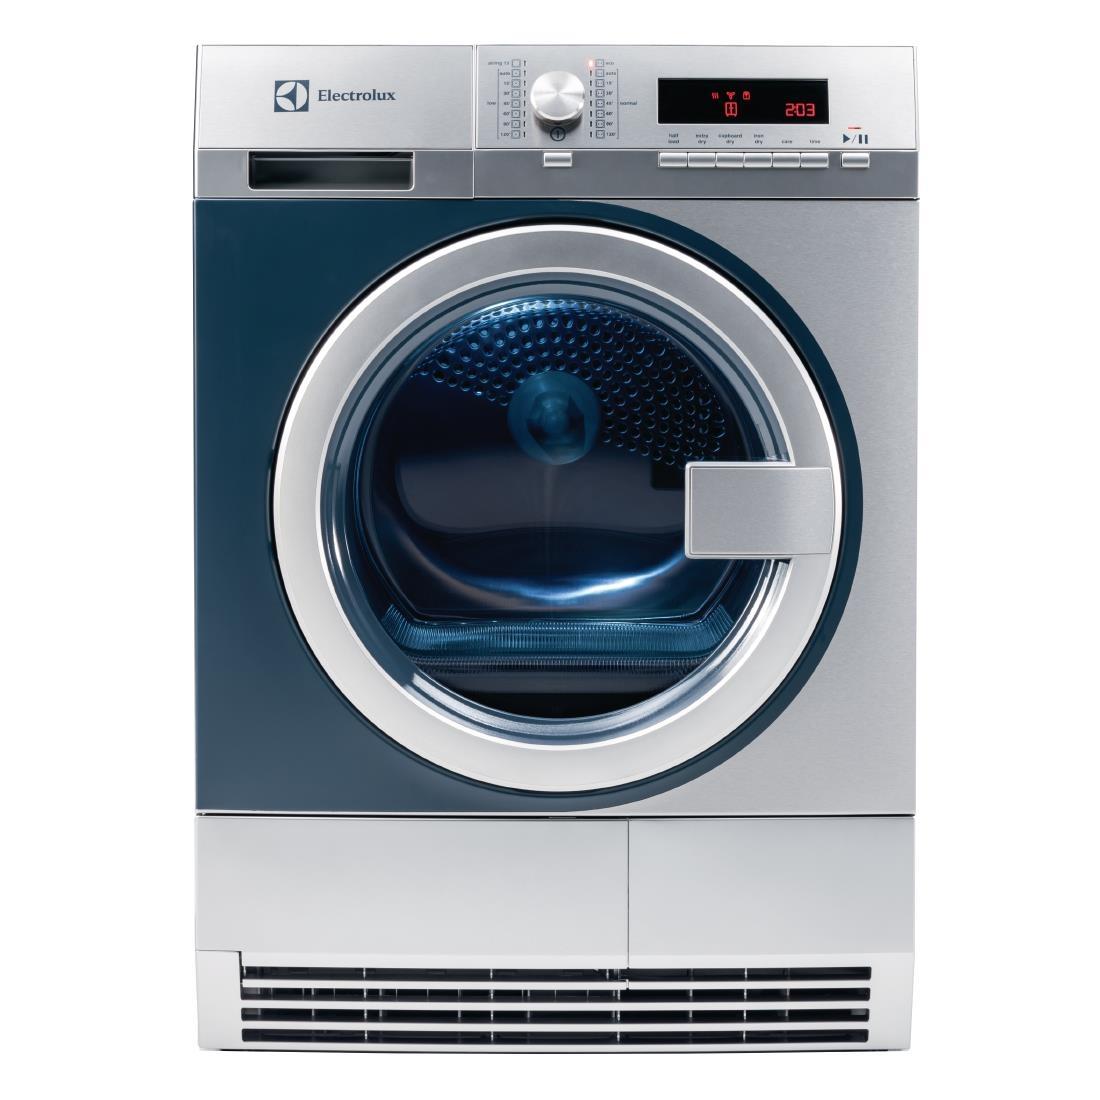 Electrolux myPRO Commercial Tumble Dryer TE1120 - CK376  - 1